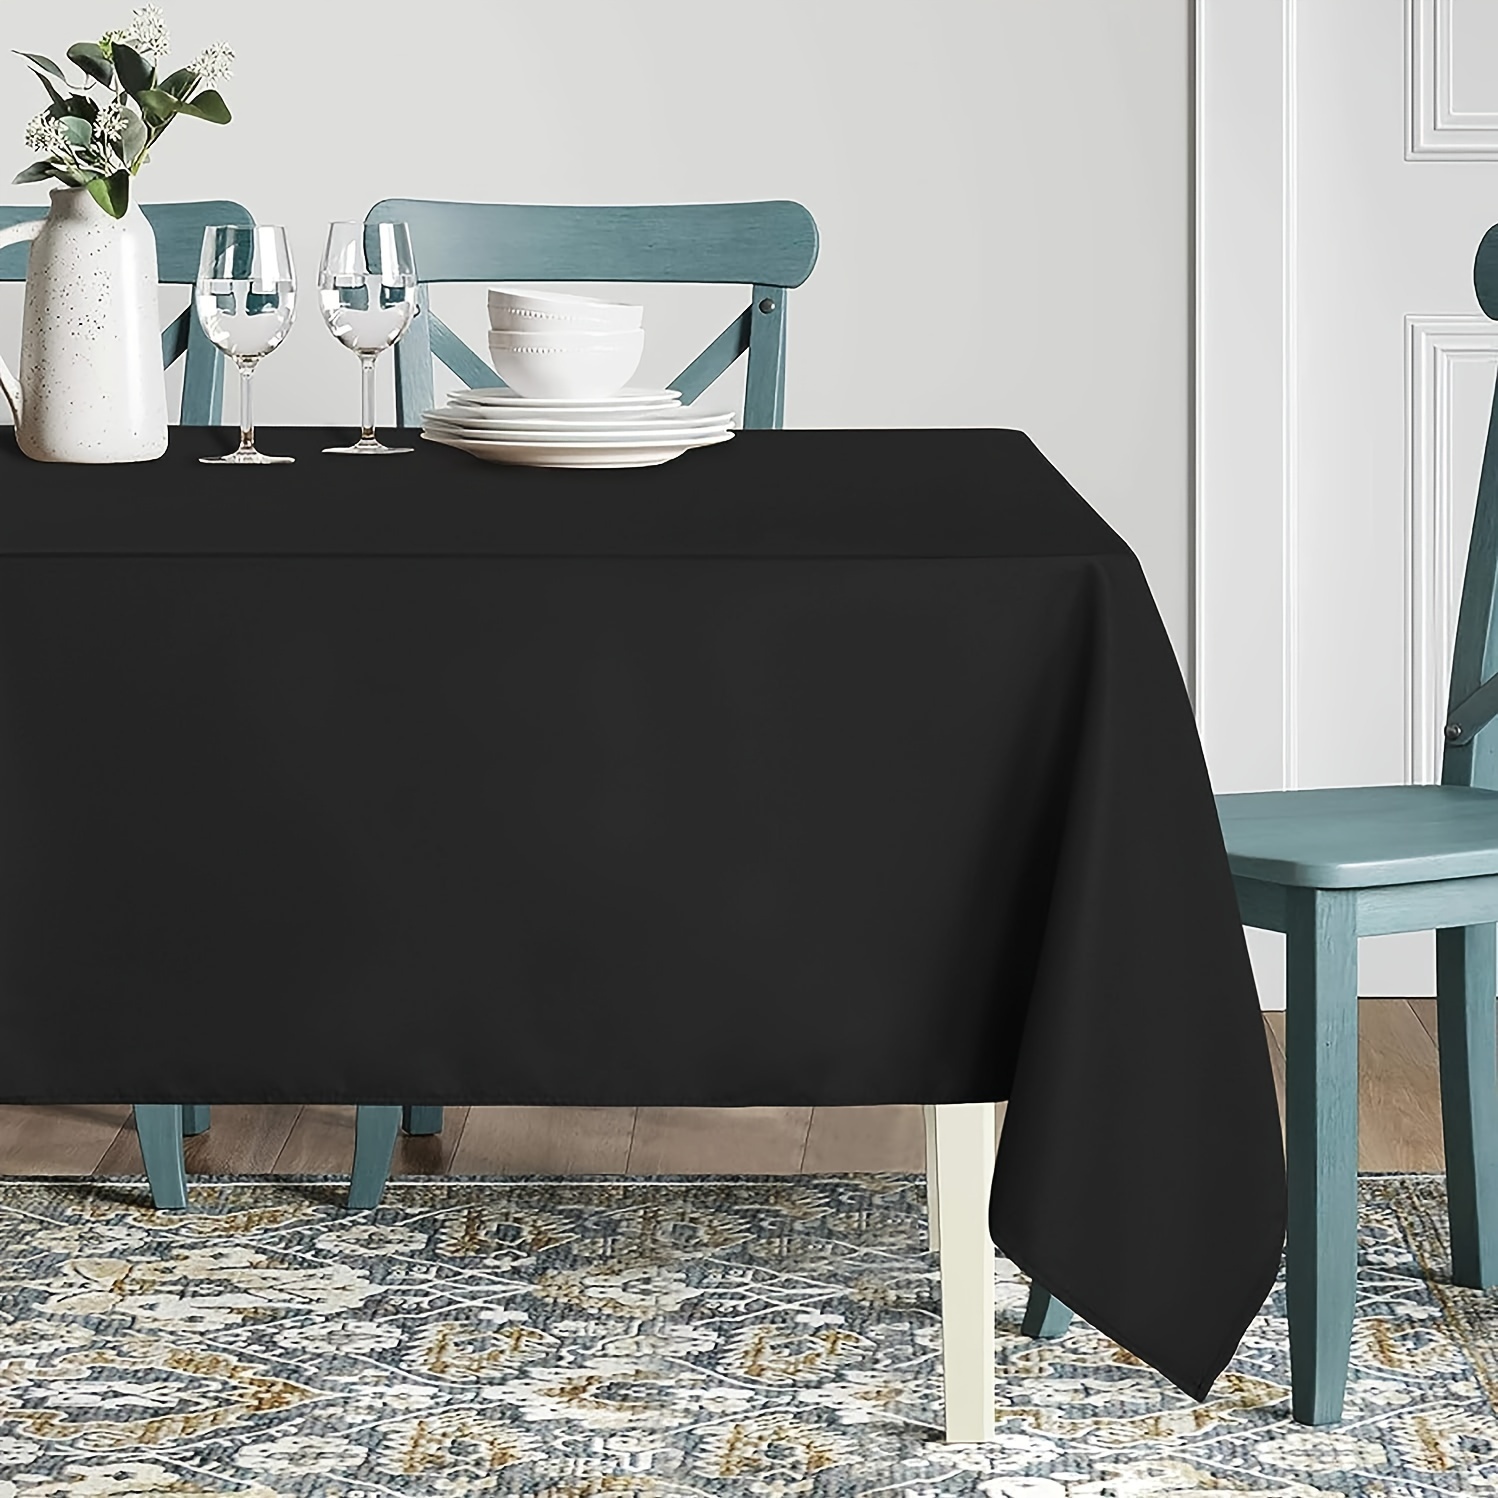  Mantel impermeable, mantel rectangular del 4 de julio, mantel  de mesa de comedor para cocina, fiesta, decoración de mesa al aire libre,  mantel rectangular de 52 x 70 pulgadas, color azul